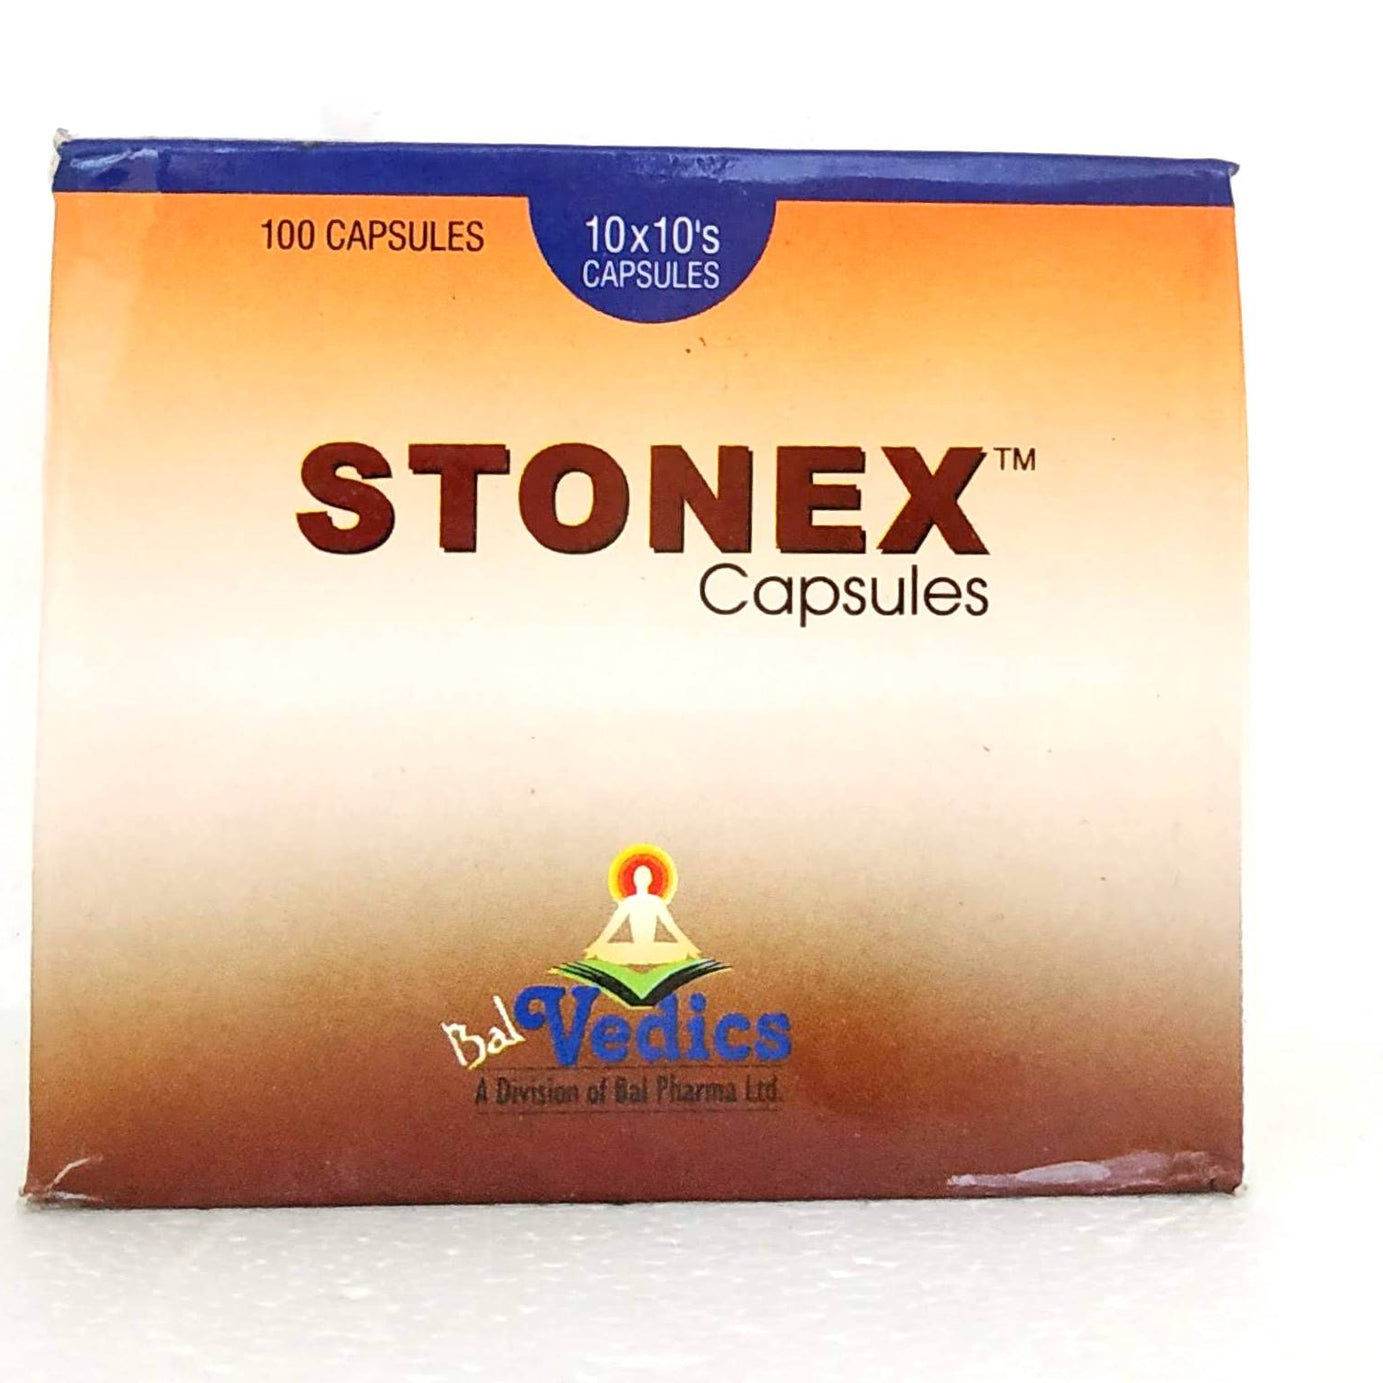 Shop Stonex capsules - 10Capsules at price 85.00 from Bal Vedics Online - Ayush Care